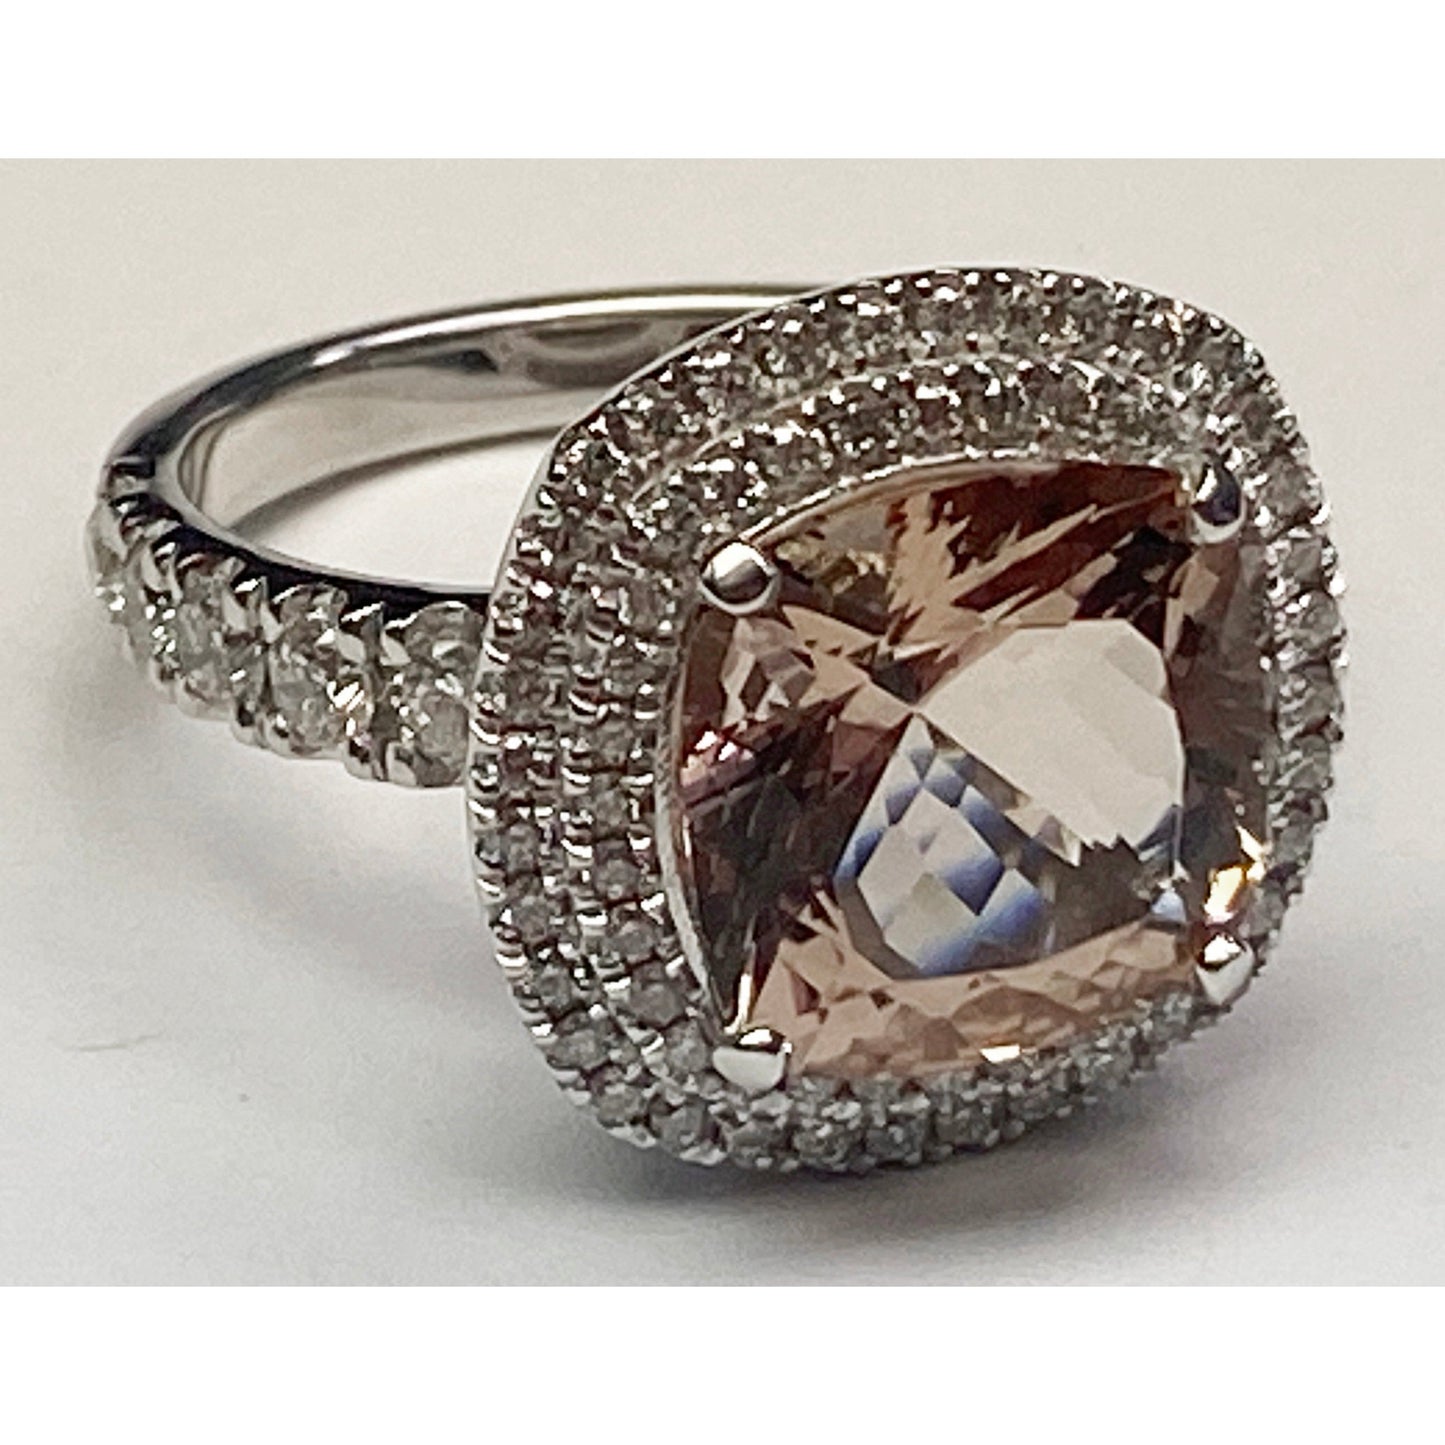 Cushion Morganite Diamond Ring